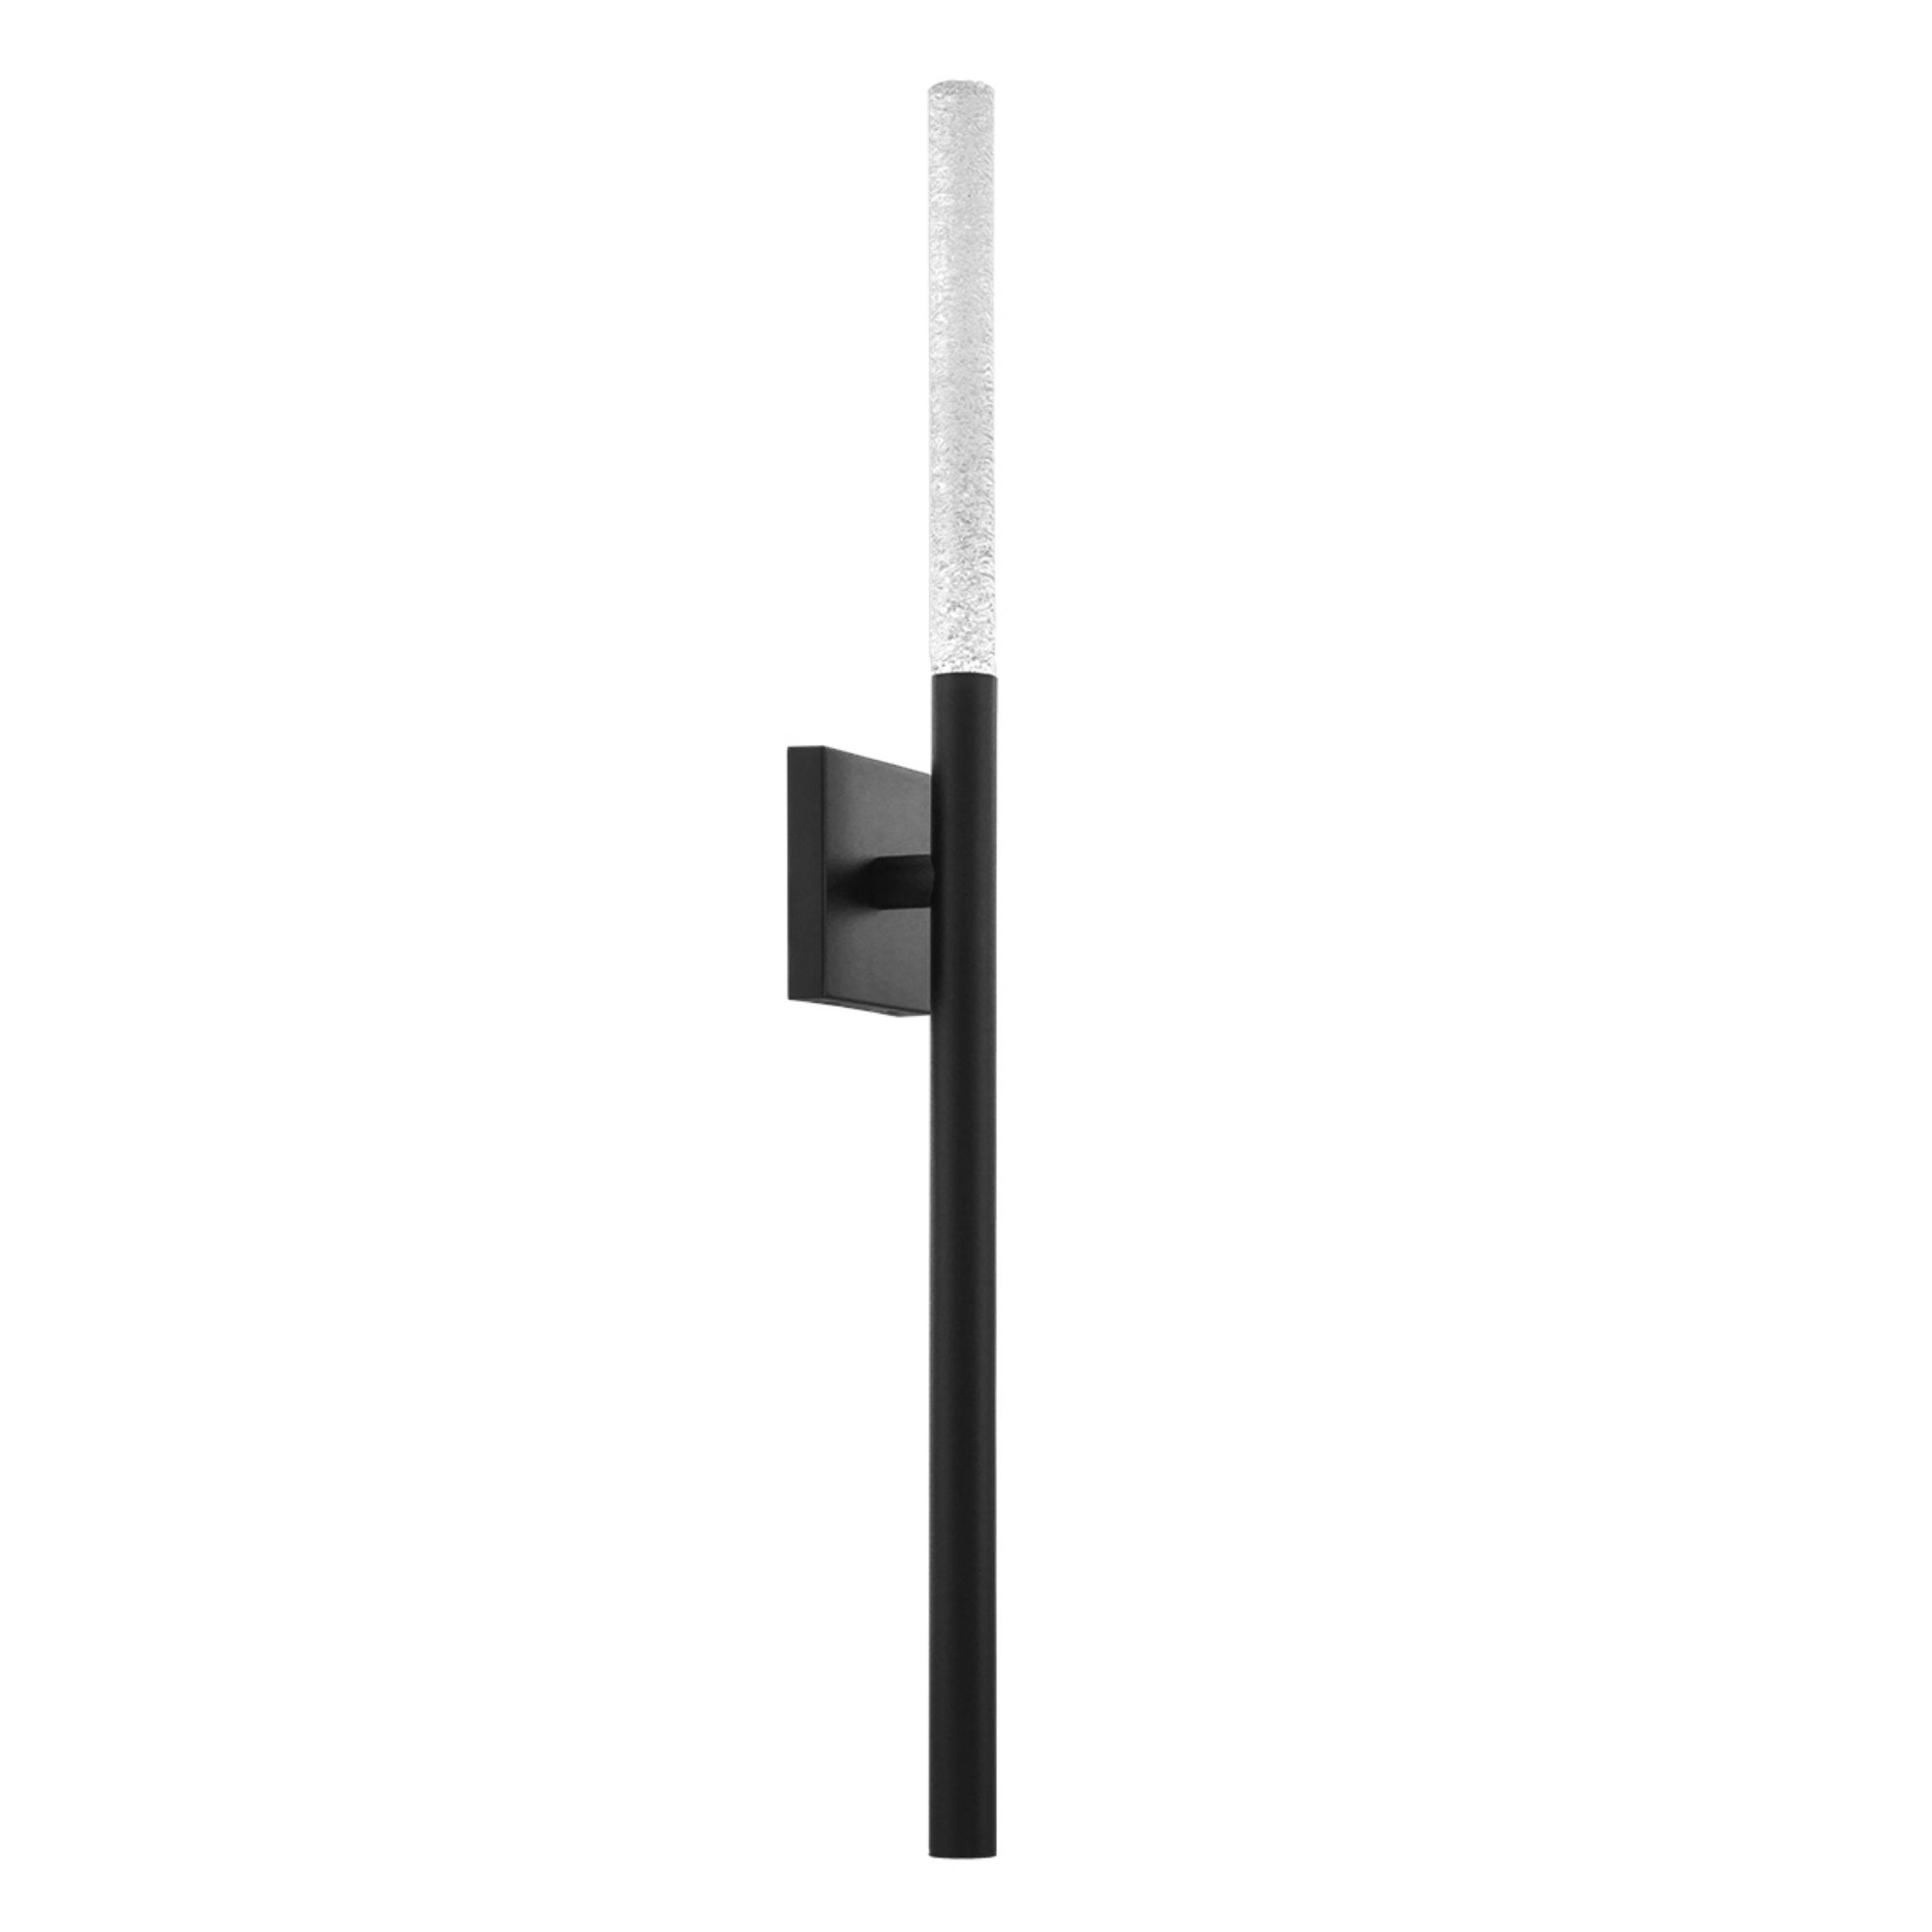 Modern Forms WS-12632-BK 3000K 11 Watt Magic LED Wall Sconce in Black